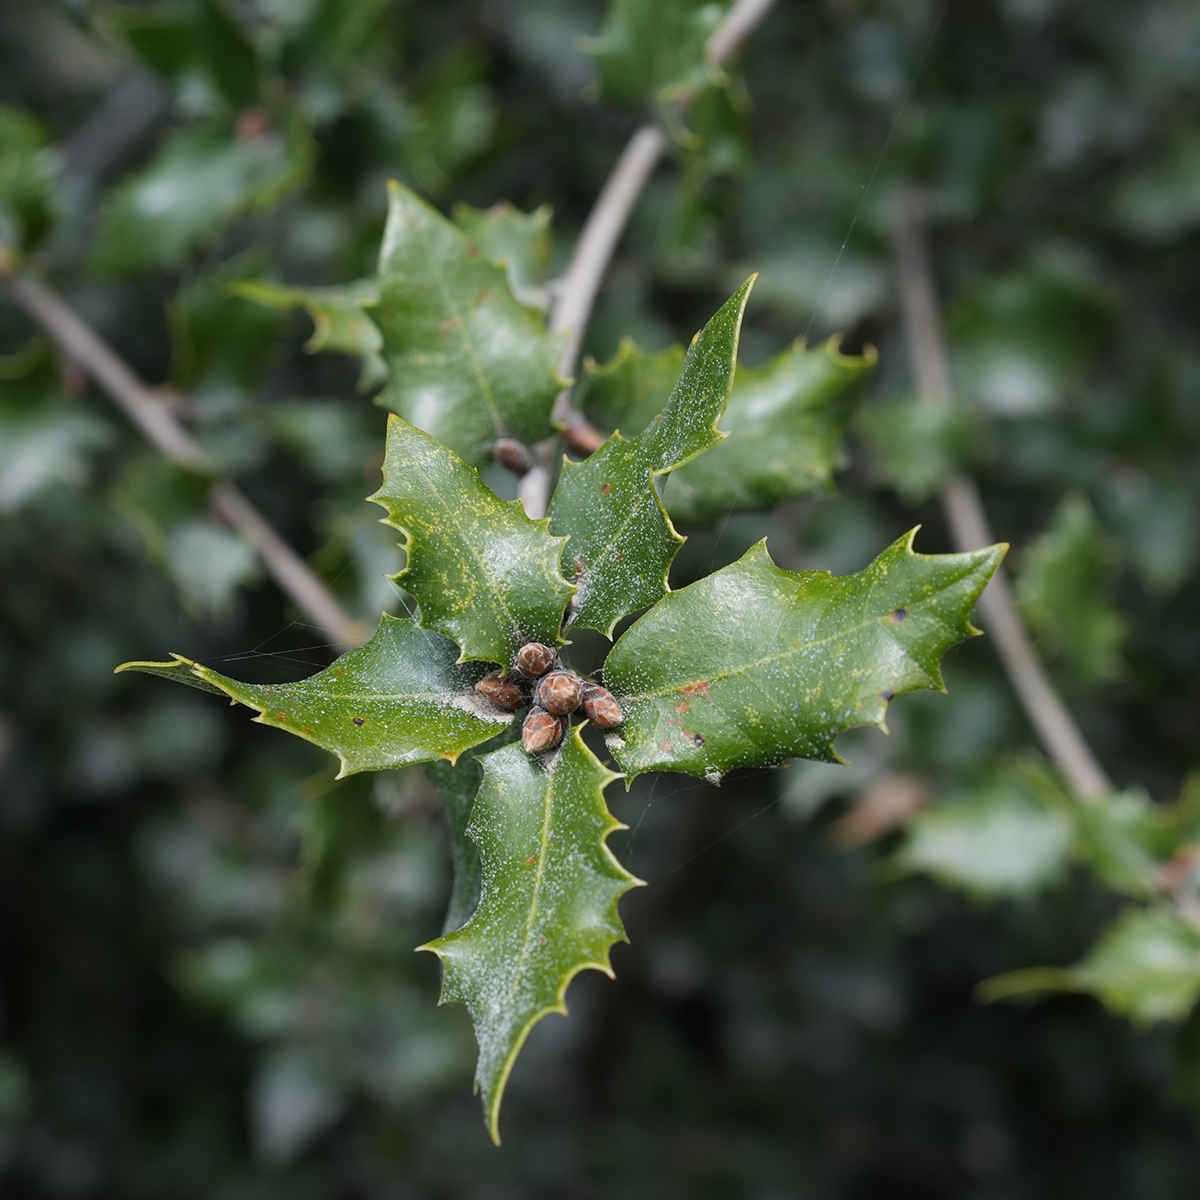 Quercus chrysolepis